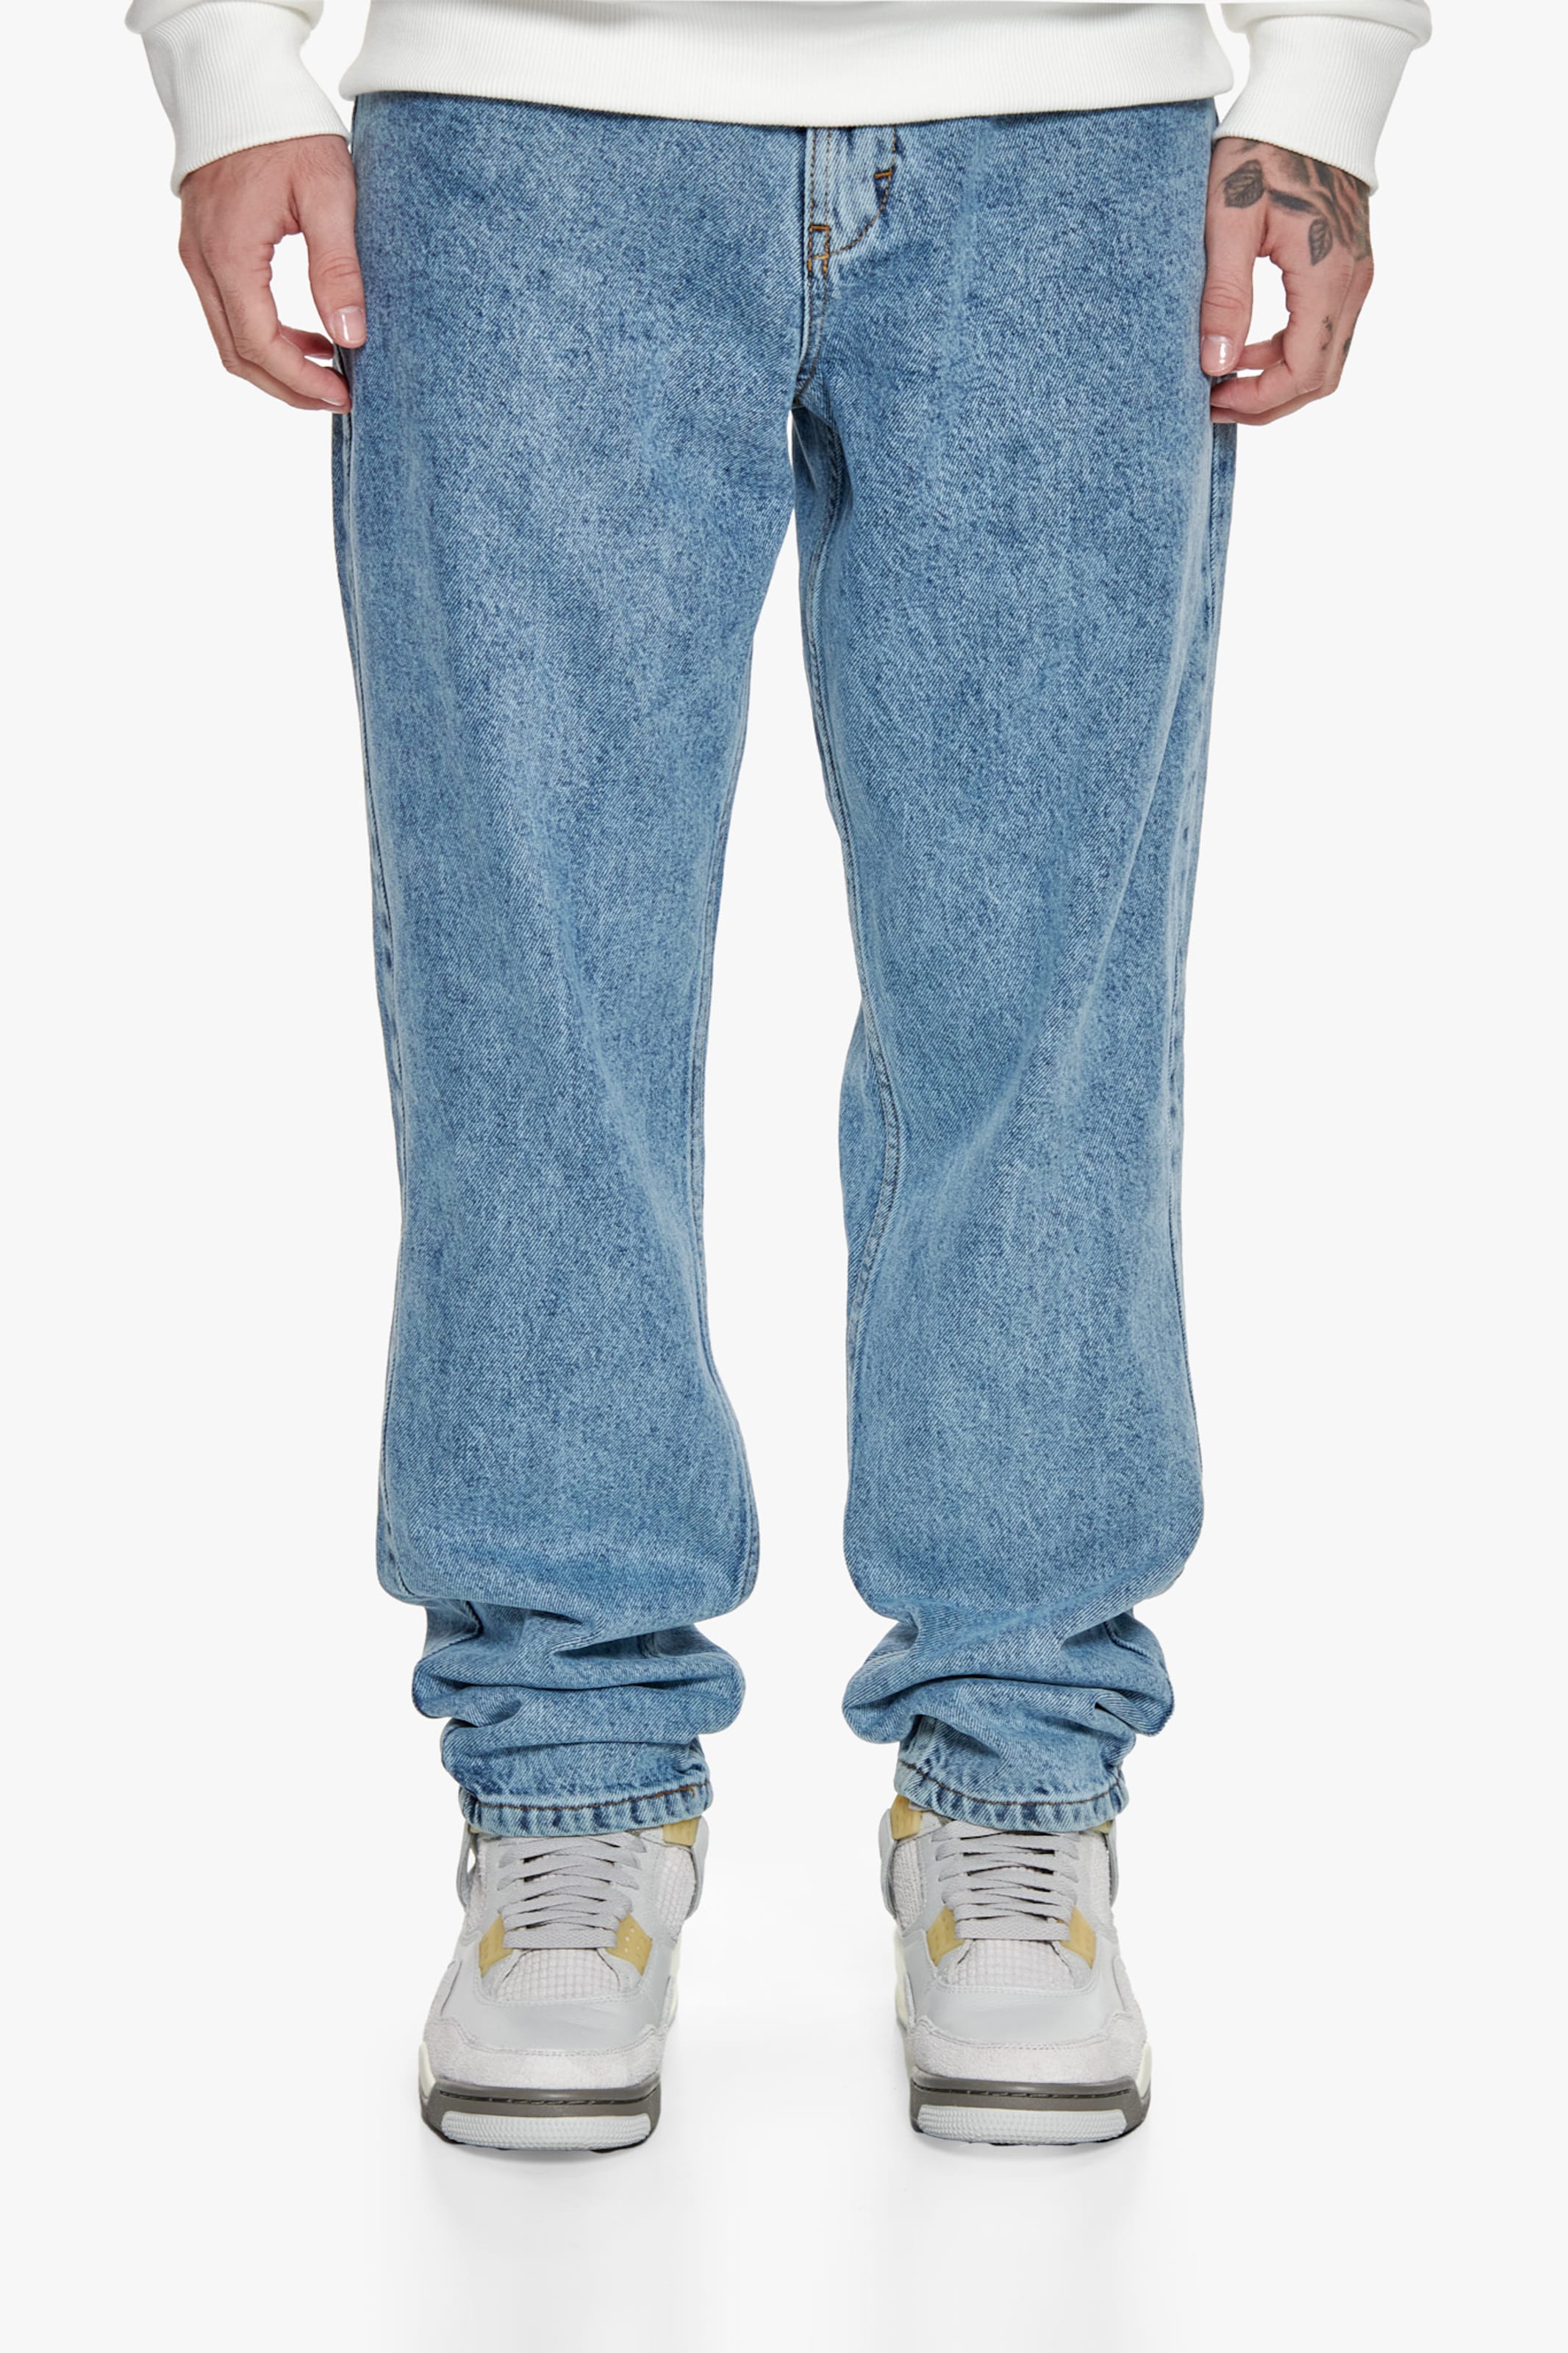 Dropsize Loose Fit Jeans Mannen op kleur blauw, Maat S